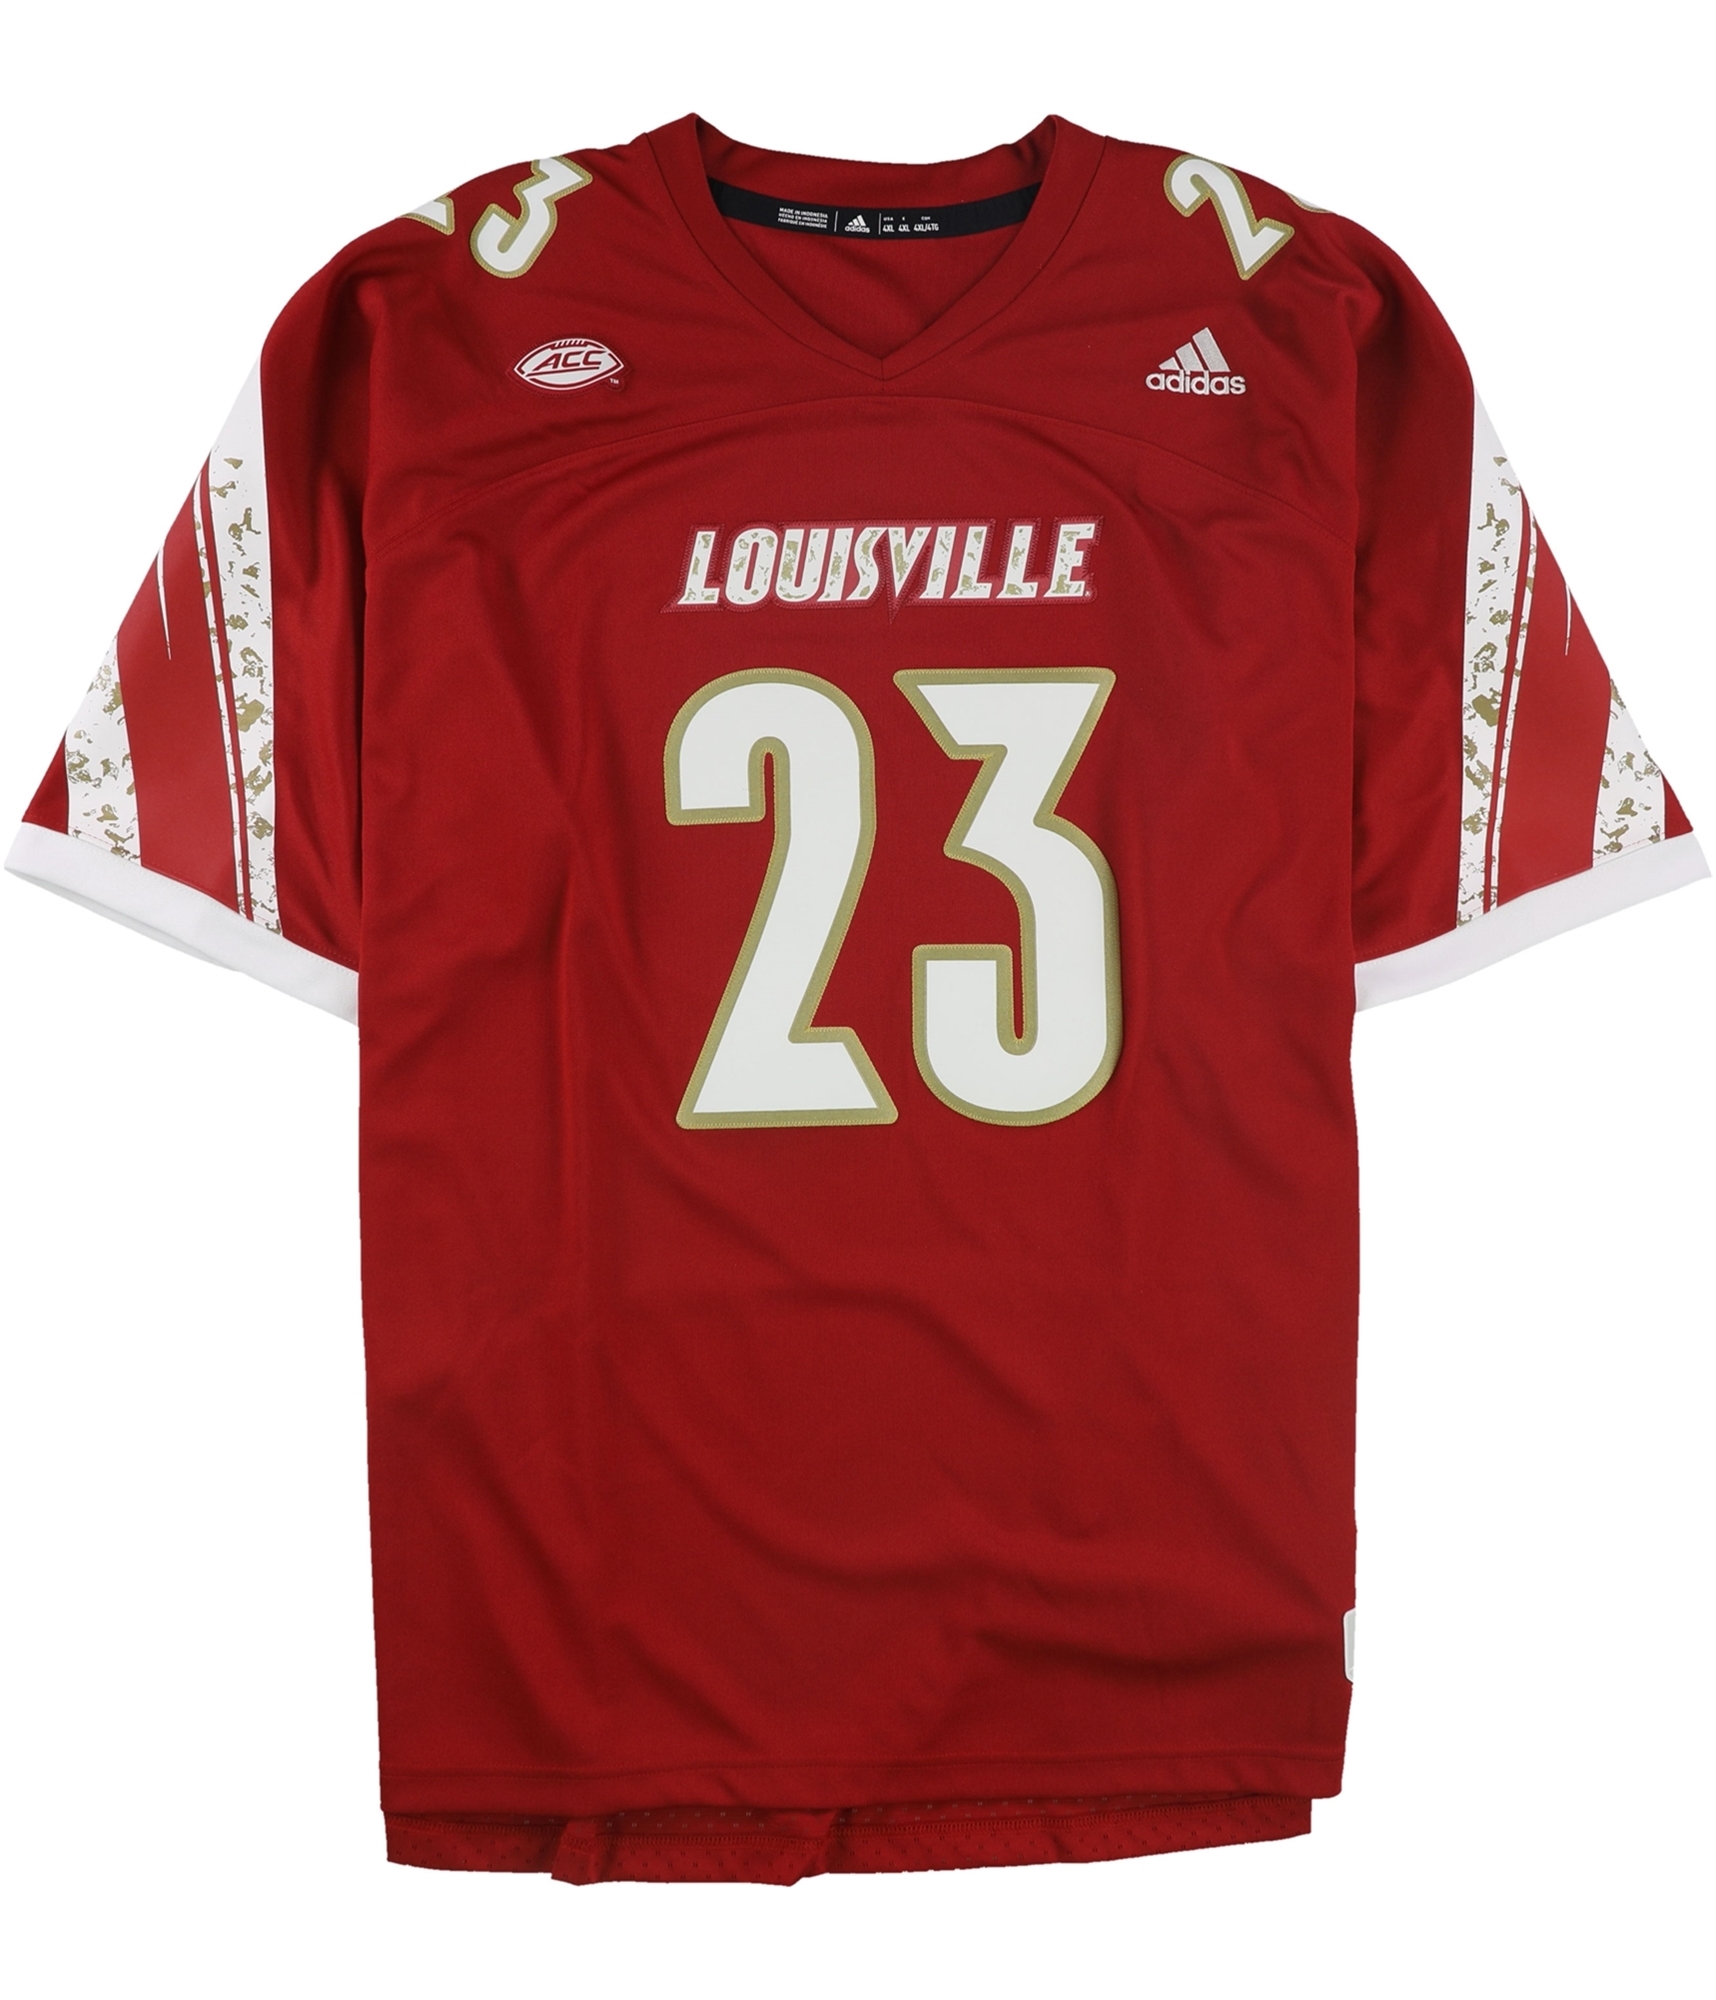 What's the best uniform the - Louisville Men's Soccer